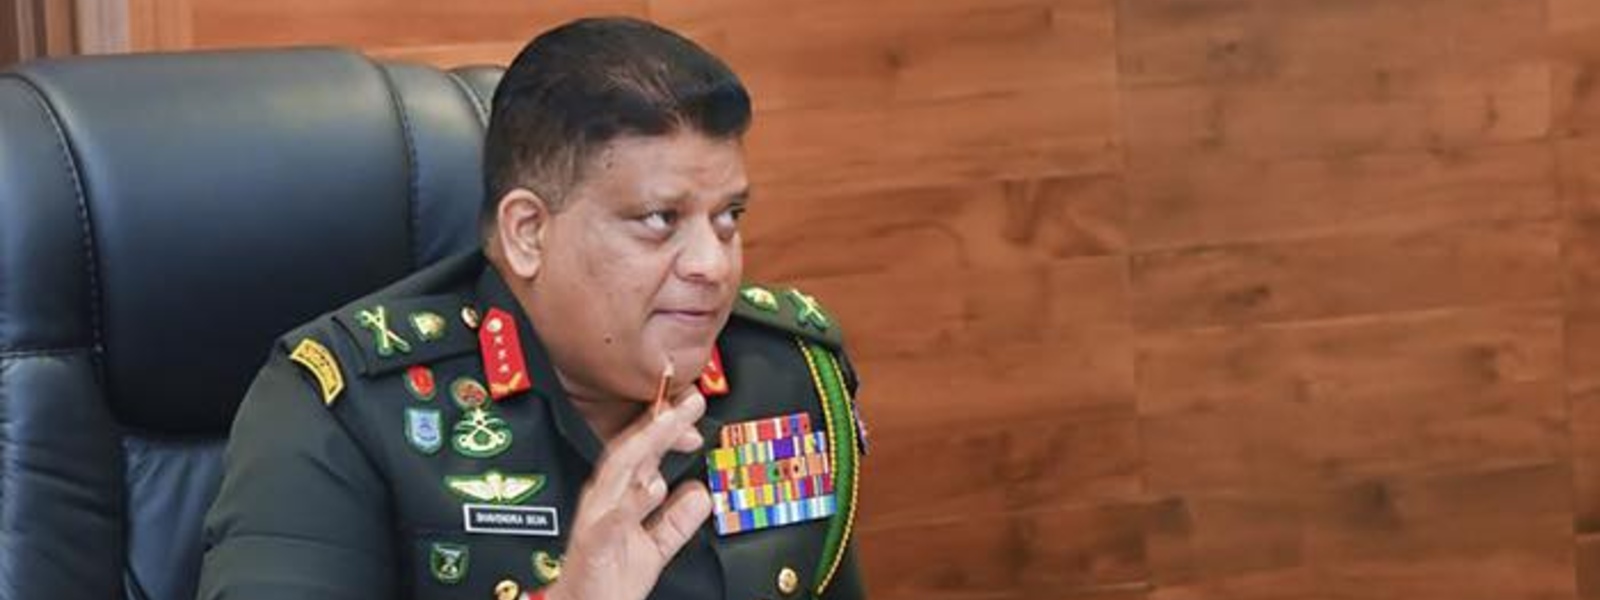 Must analyze reports before lifting curfew on Monday – Lt. Gen. Shavendra Silva